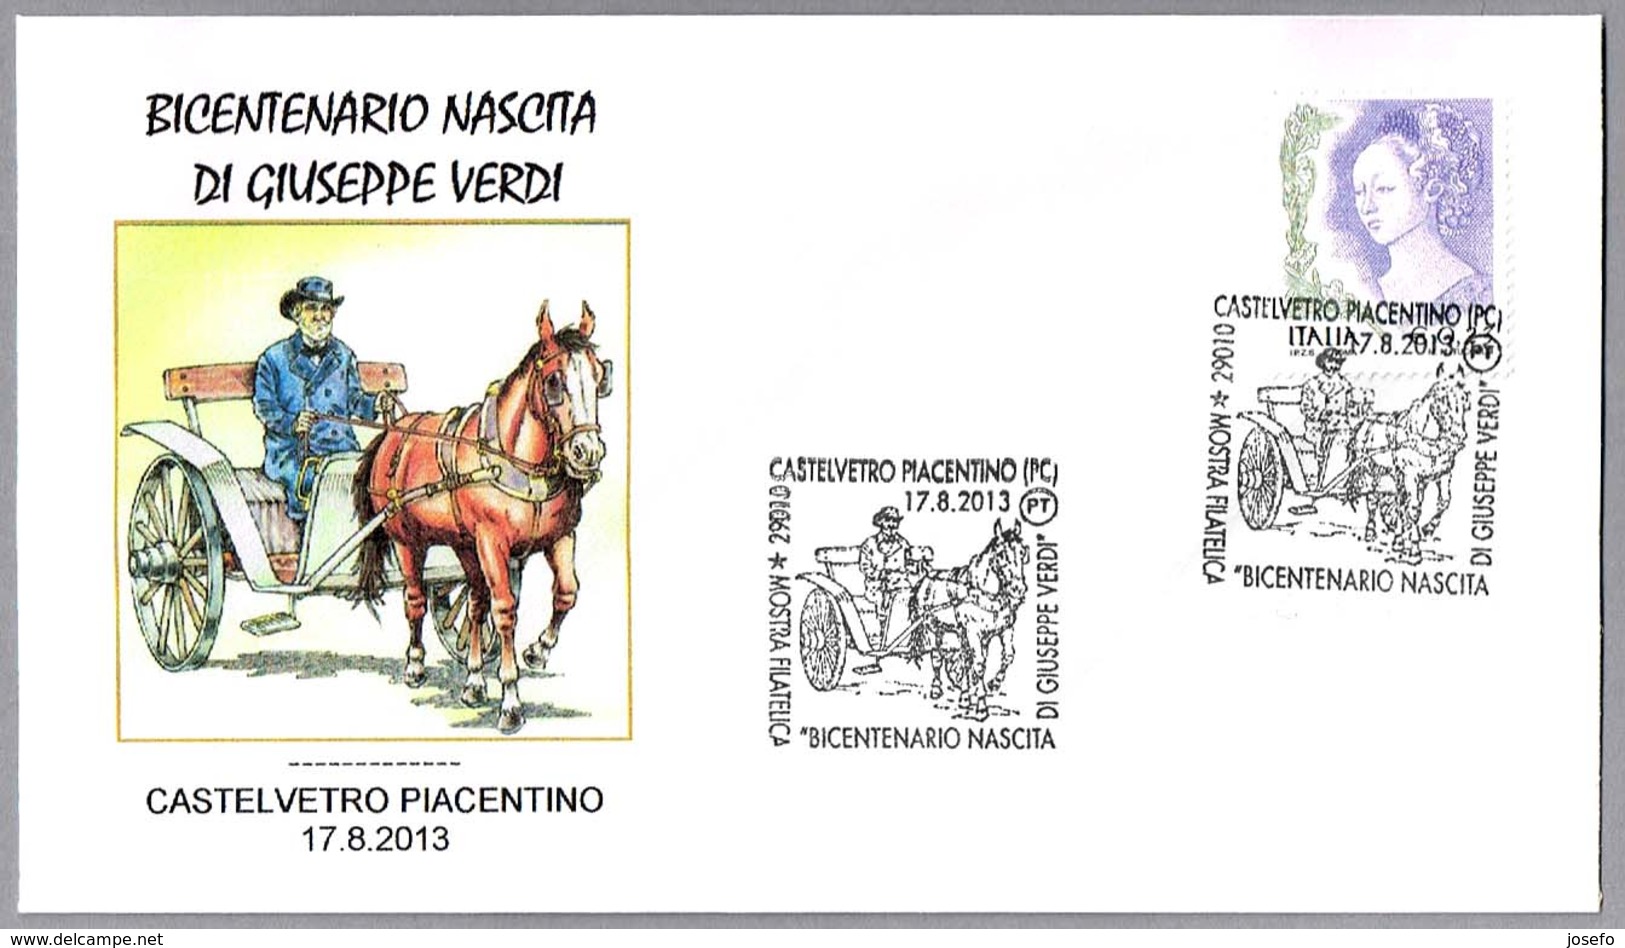 200 Años Nacimiento De GIUSEPPE VERDI. Castelvetro Piacentino, Piacenza, 2013 - Music